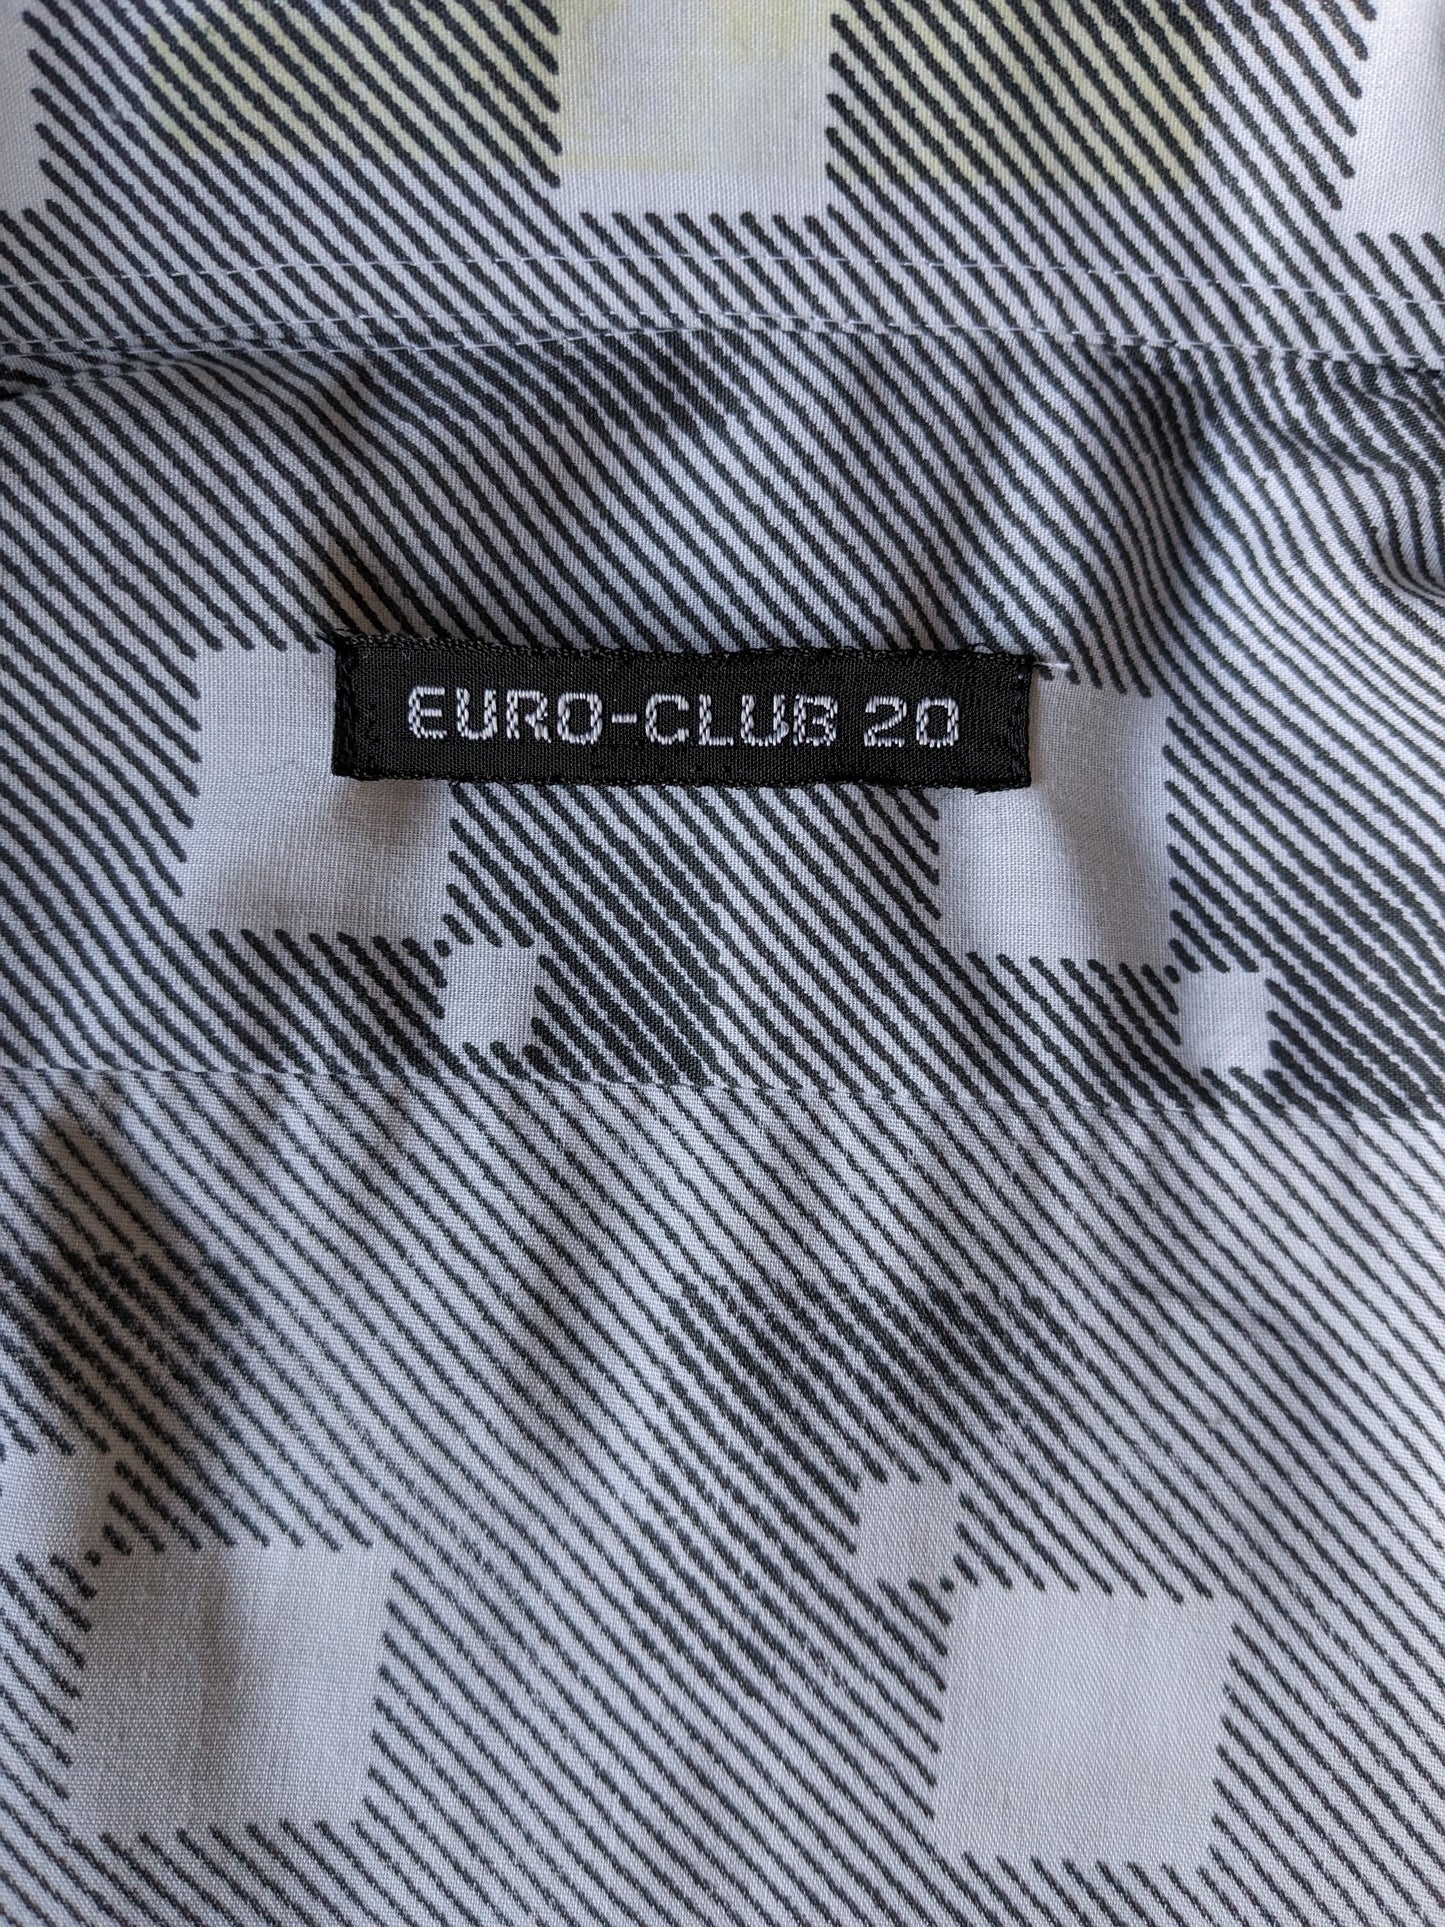 Vintage Euro-Club-20 70's overhemd met puntkraag. Wit Grijze print. Maat M.